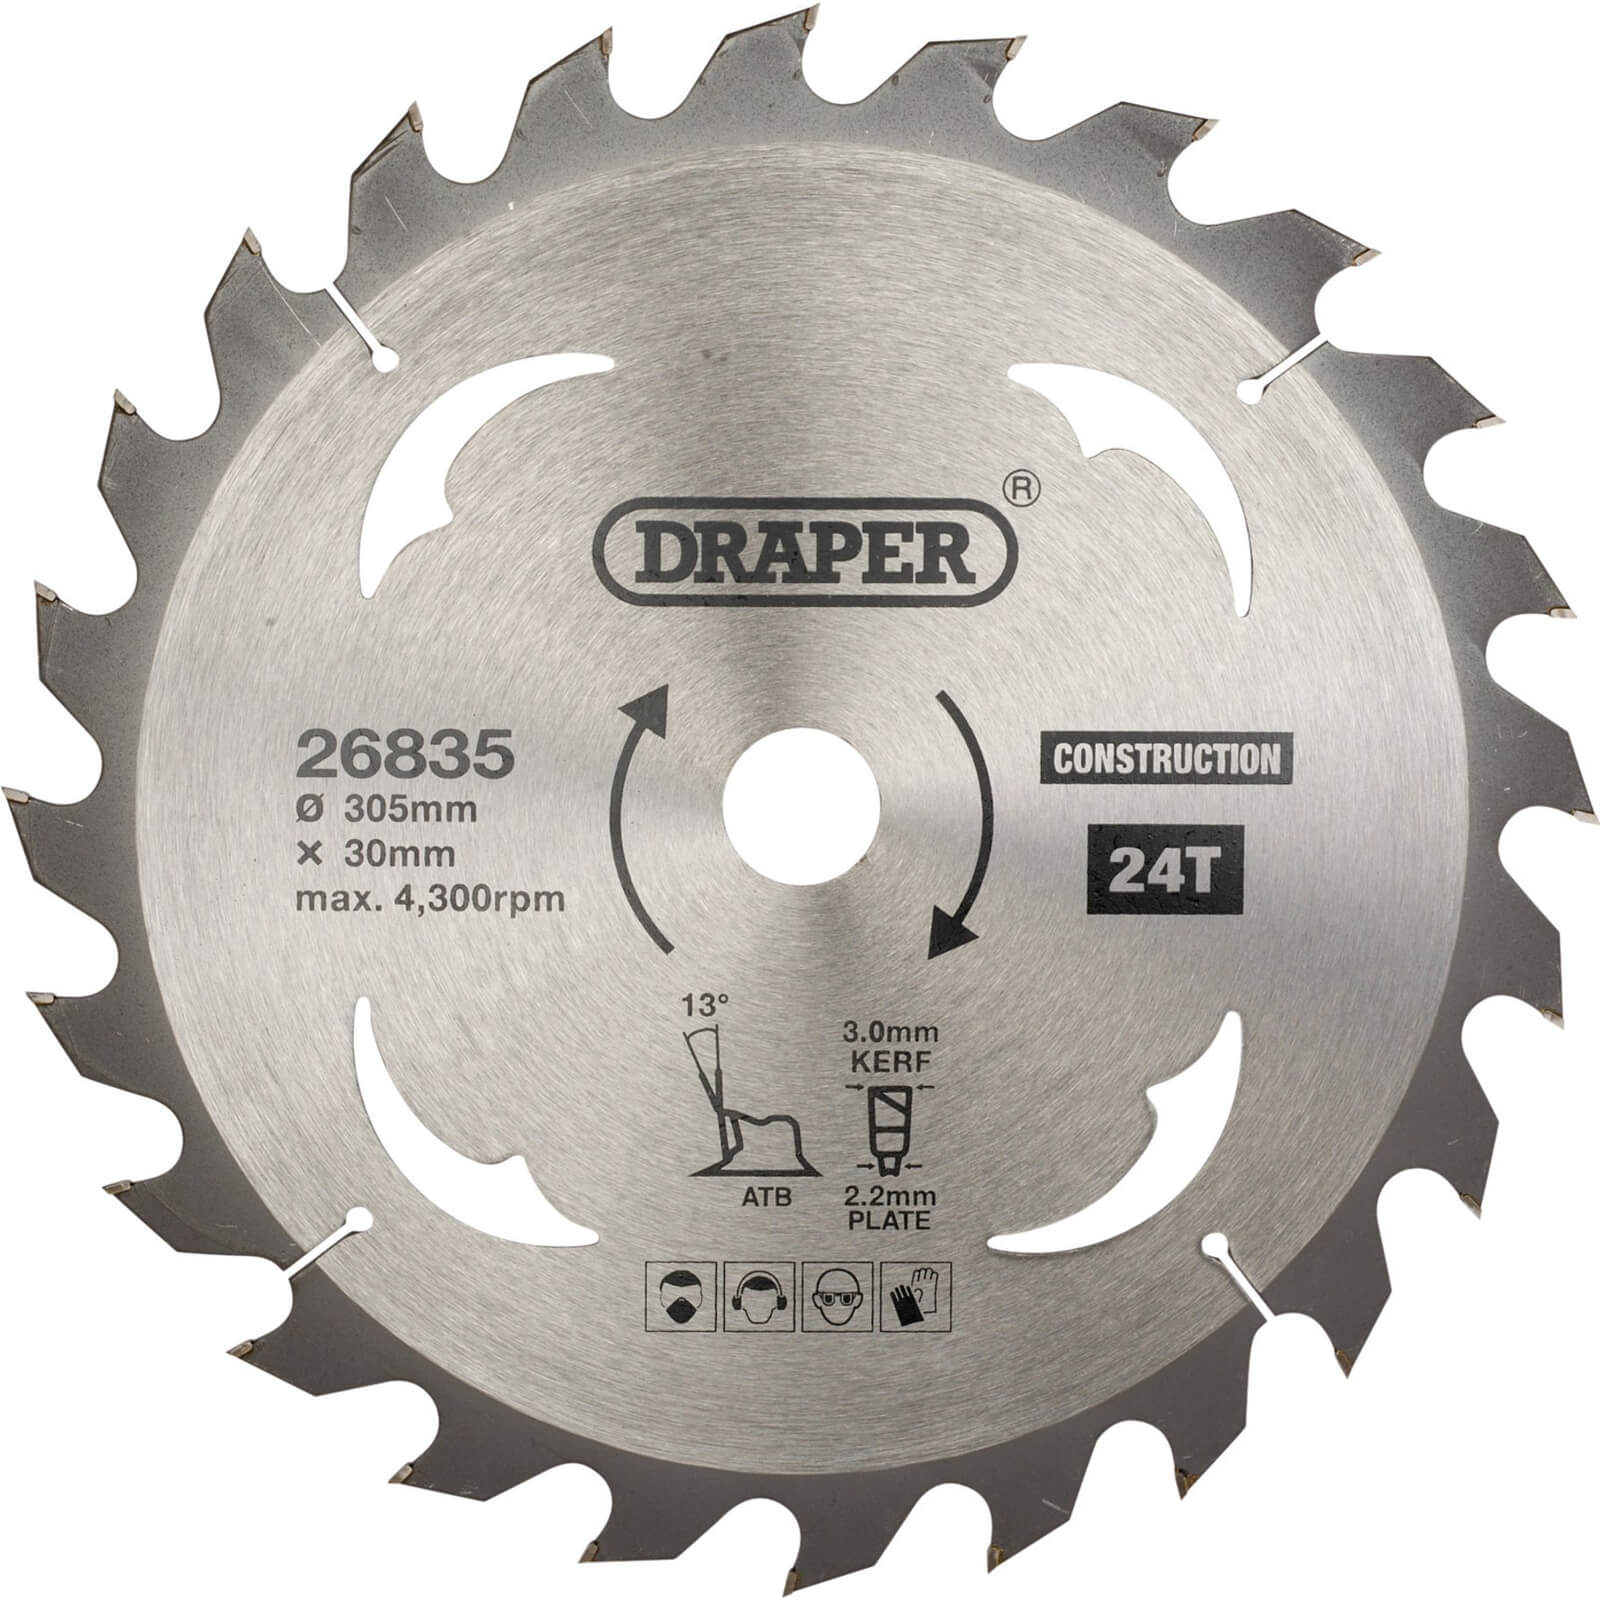 Image of Draper TCT Construction Circular Saw Blade 305mm 24T 30mm